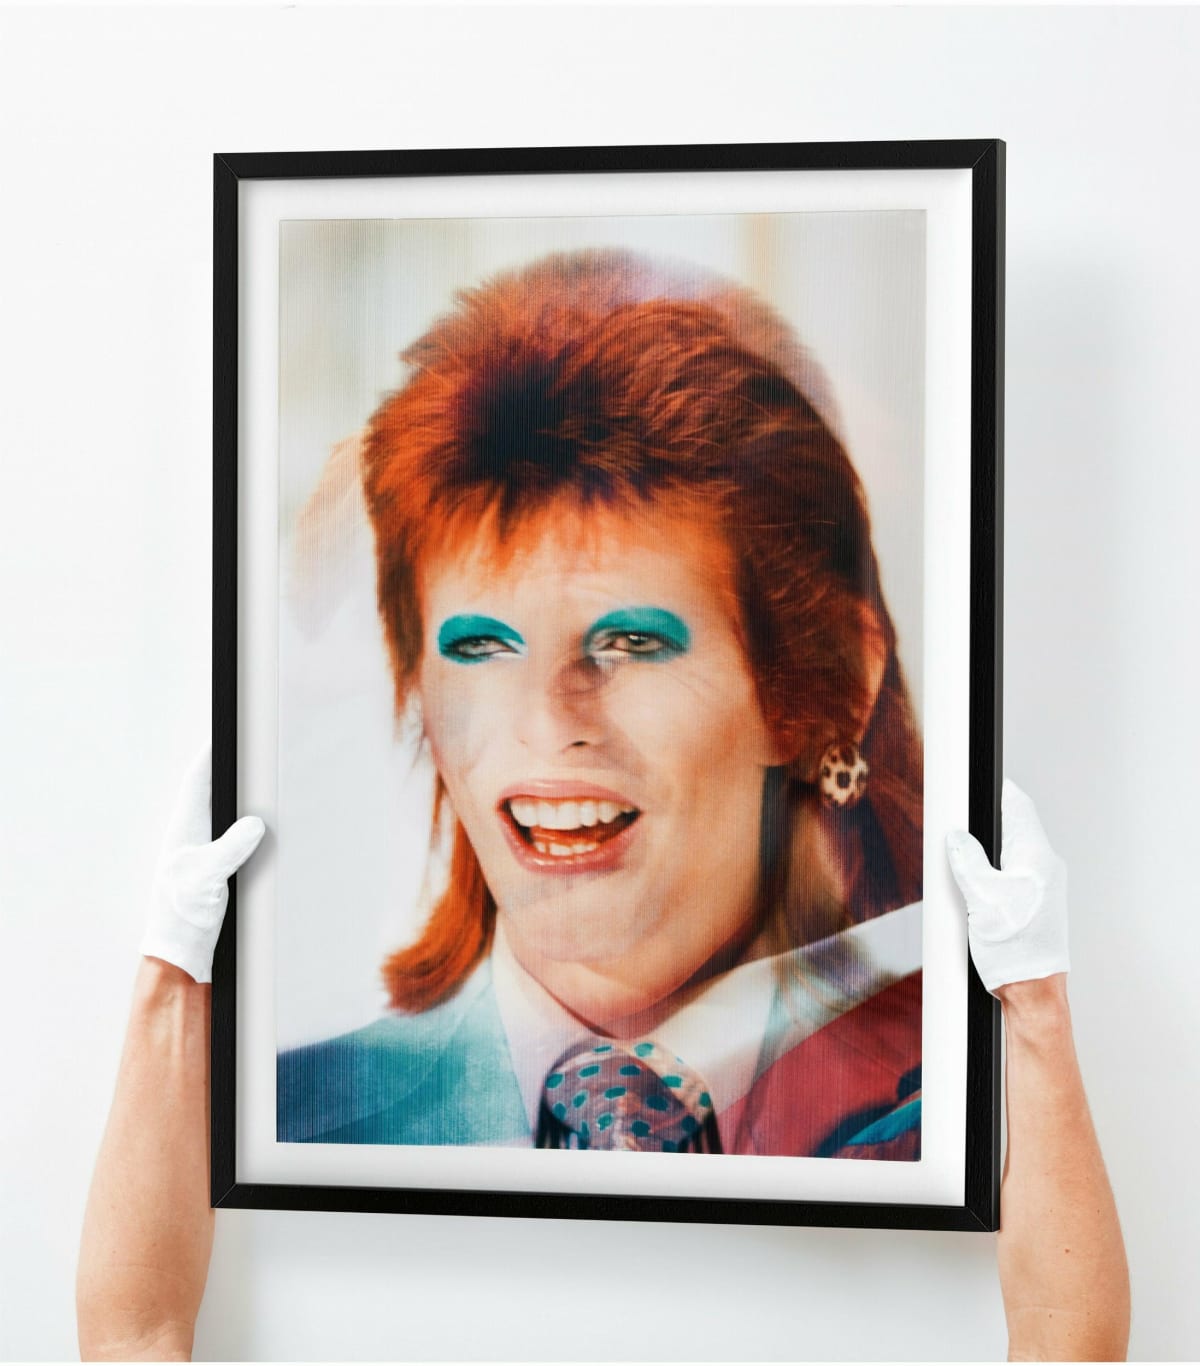 Mick Rock. David Bowie 'Changes' Lenticular